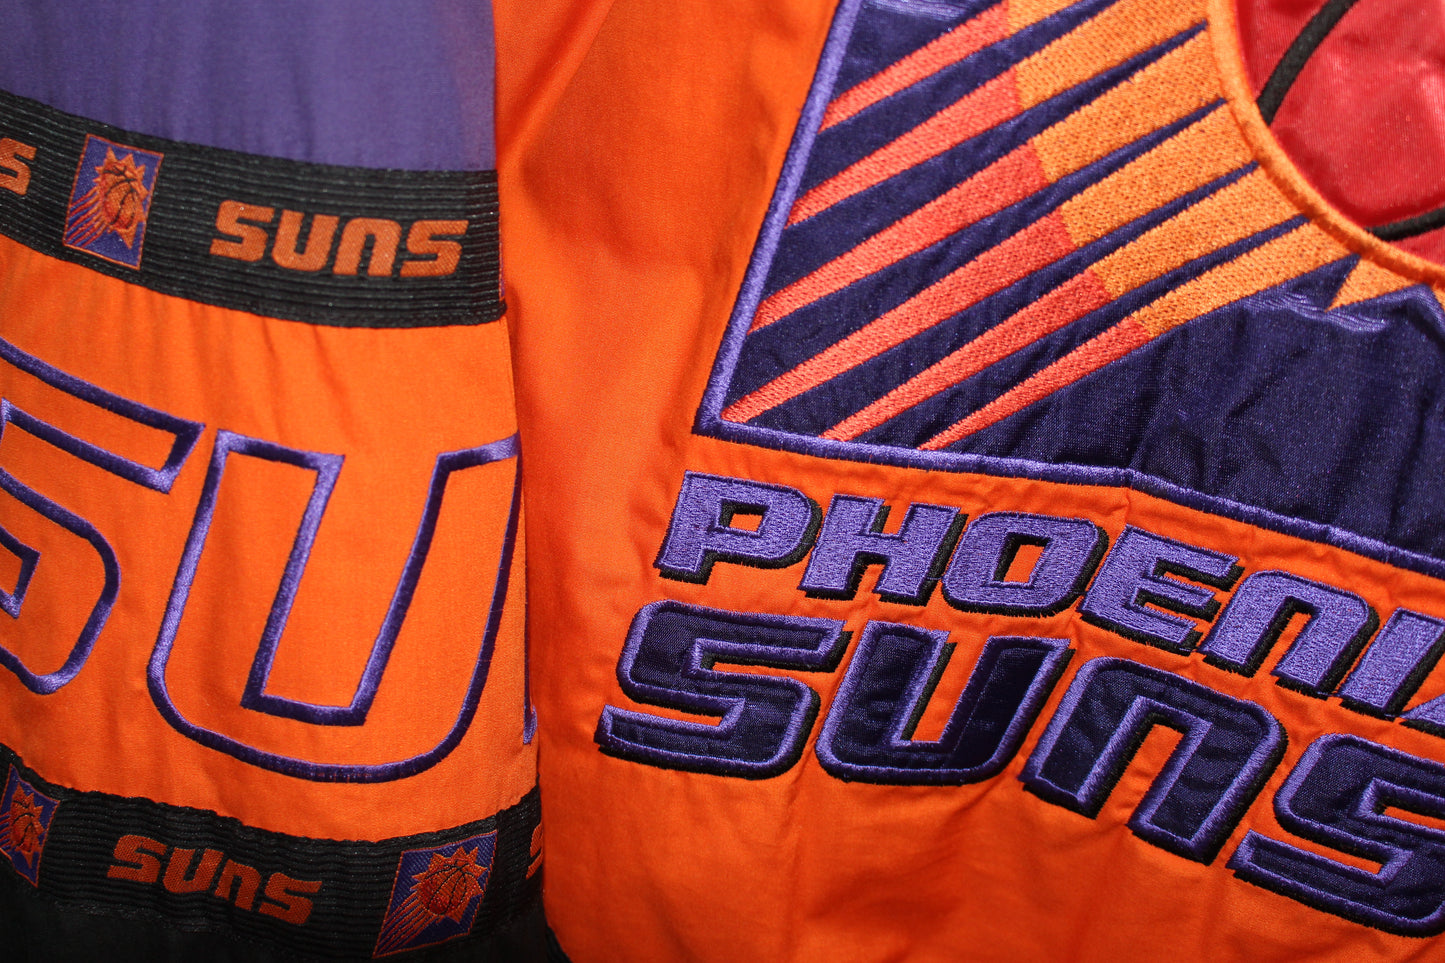 Phoenix Suns Pro Player Puffer (XL)